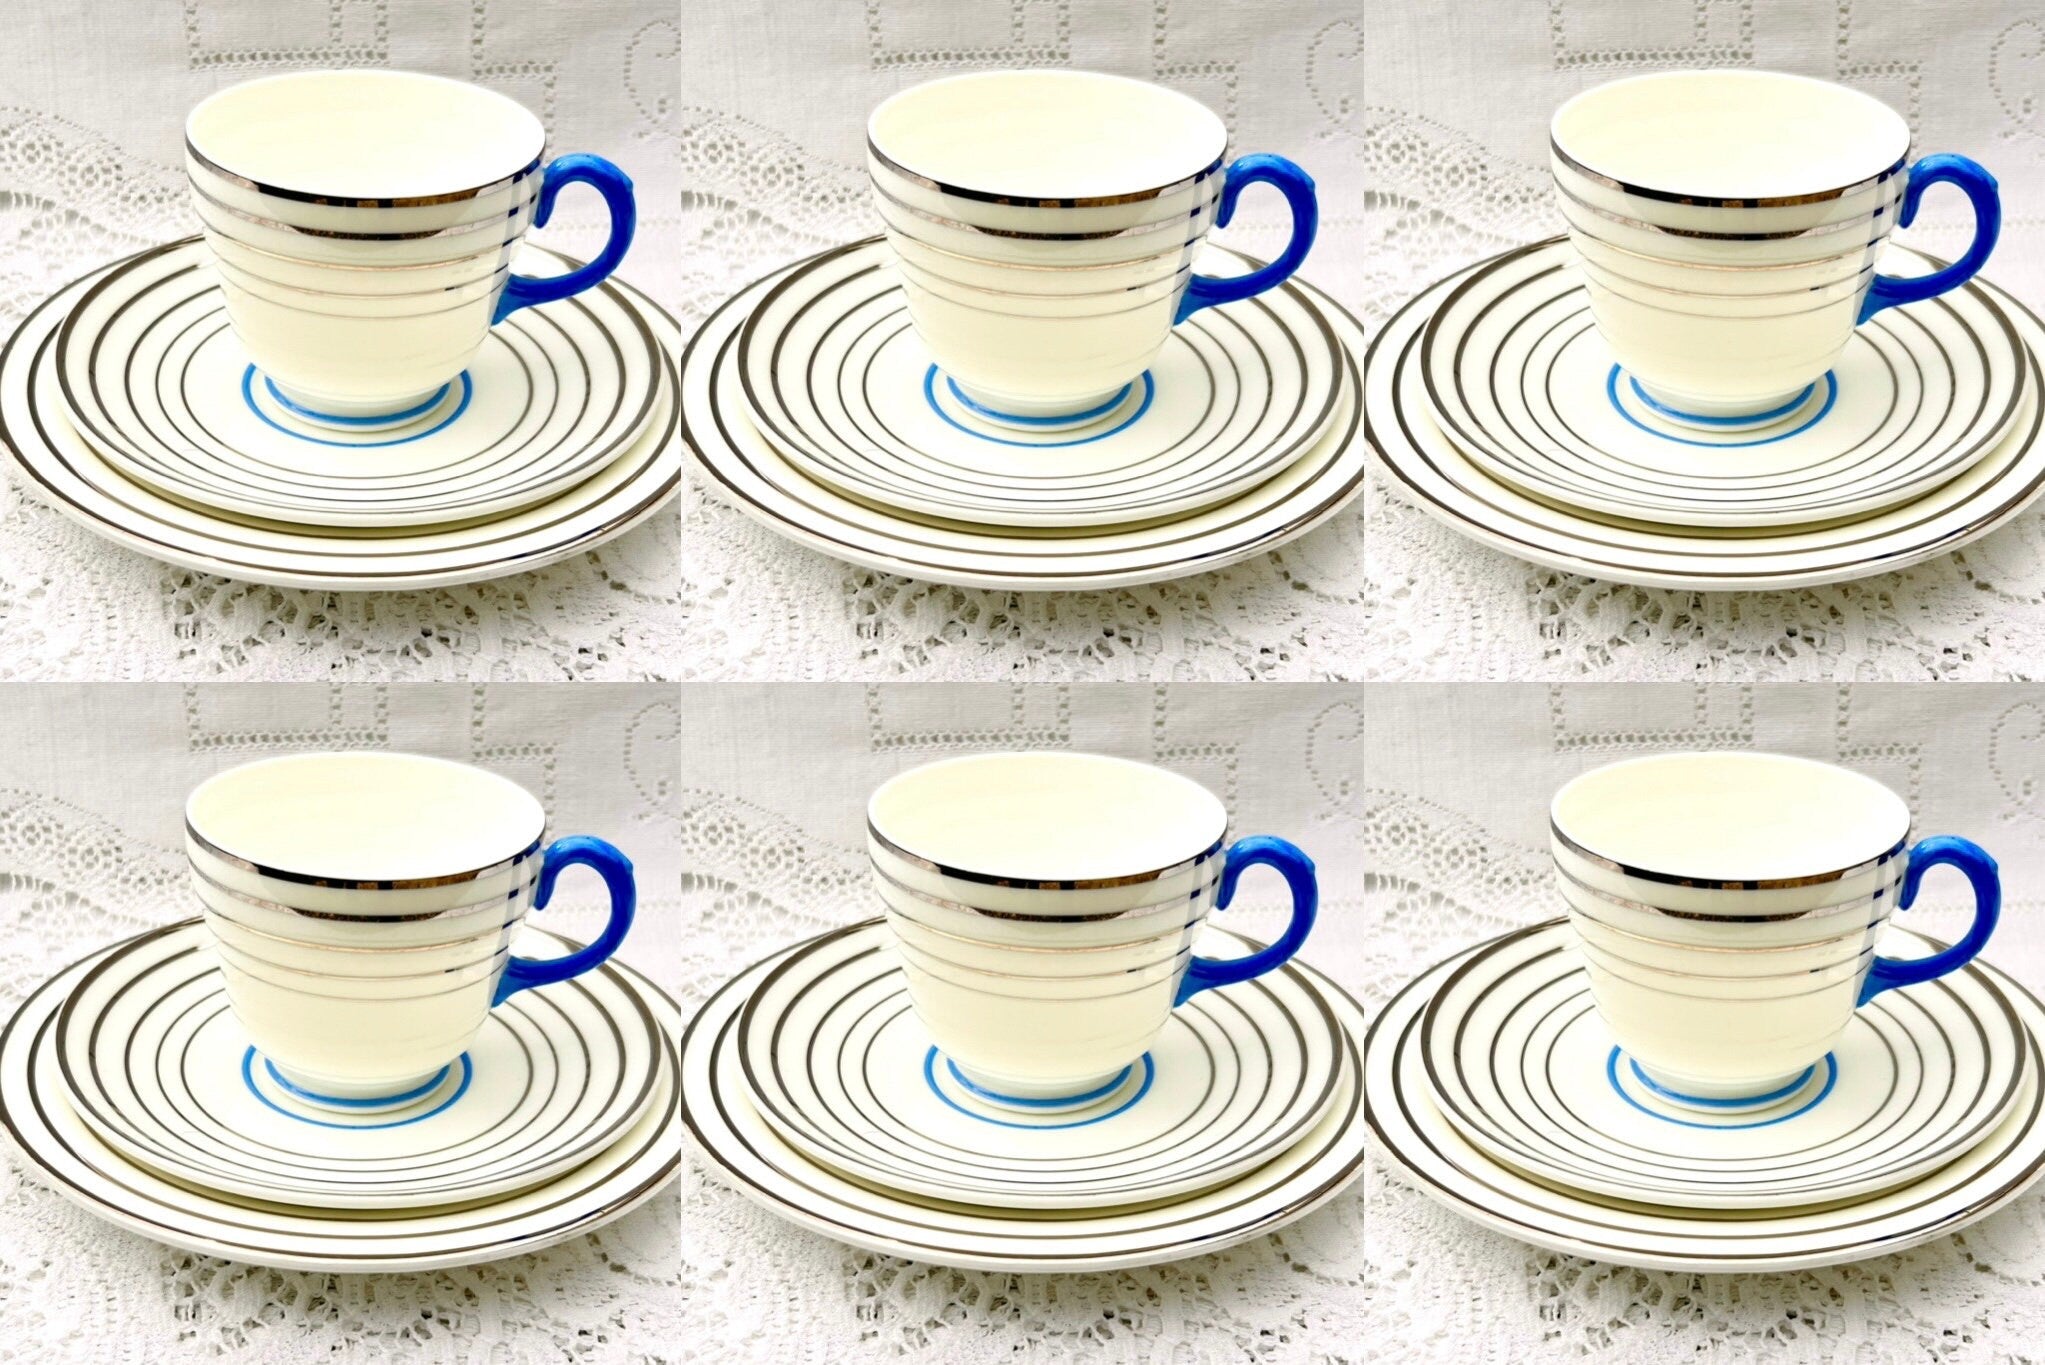 RARE Wedgwood Art Deco Tea Set Tea cups saucers blue white silver bands